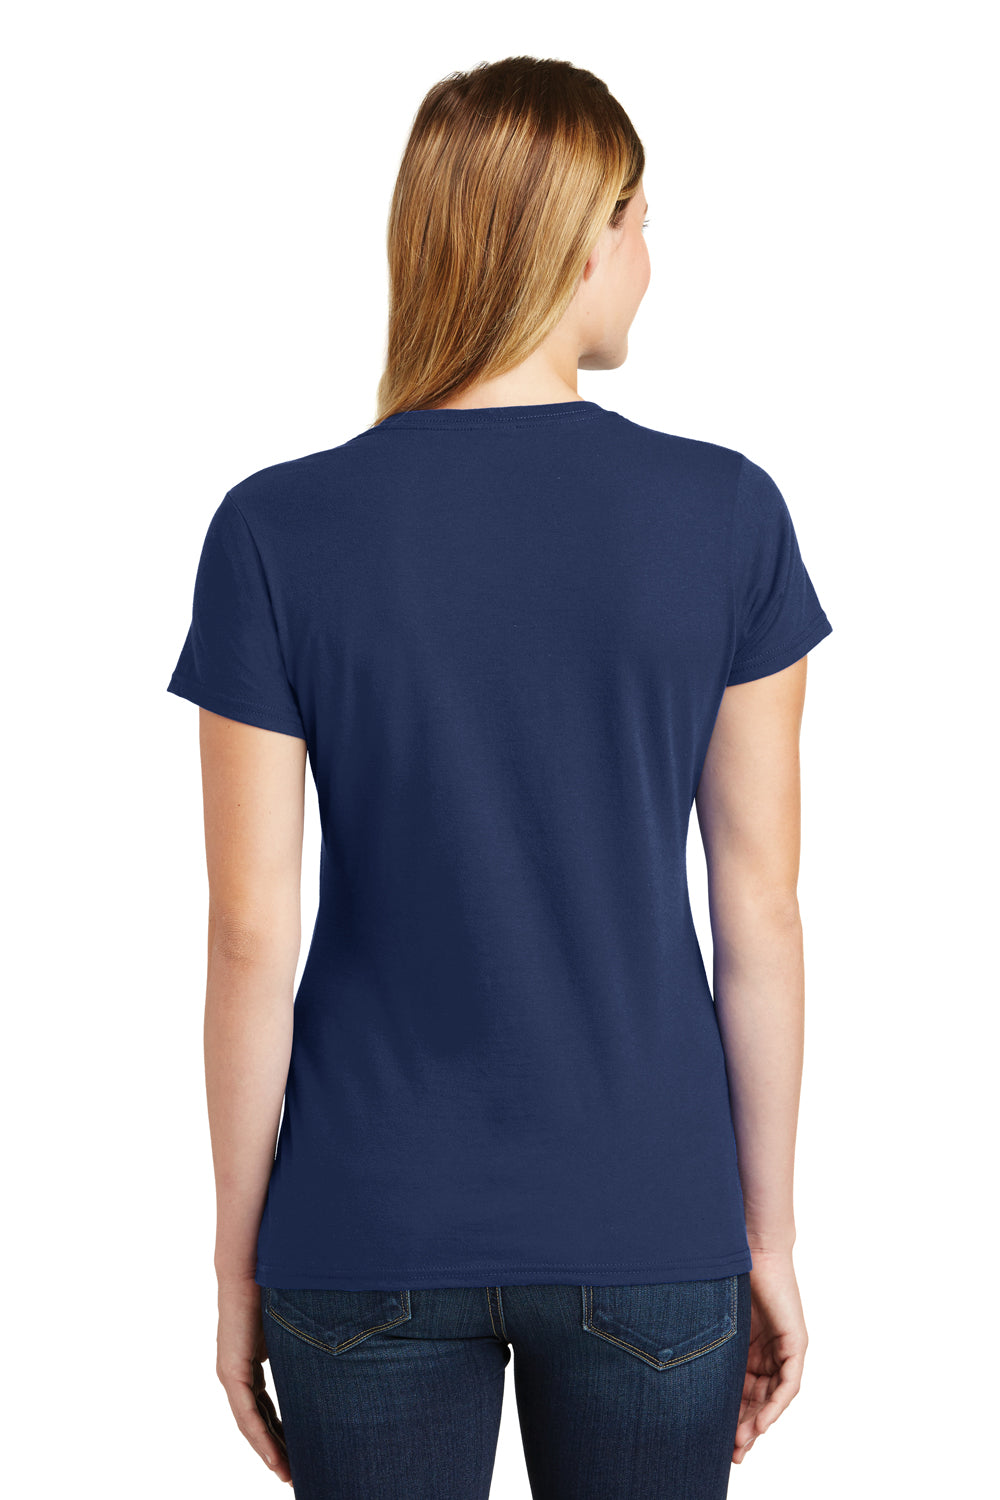 Port & Company LPC450 Womens Fan Favorite Short Sleeve Crewneck T-Shirt Navy Blue Back